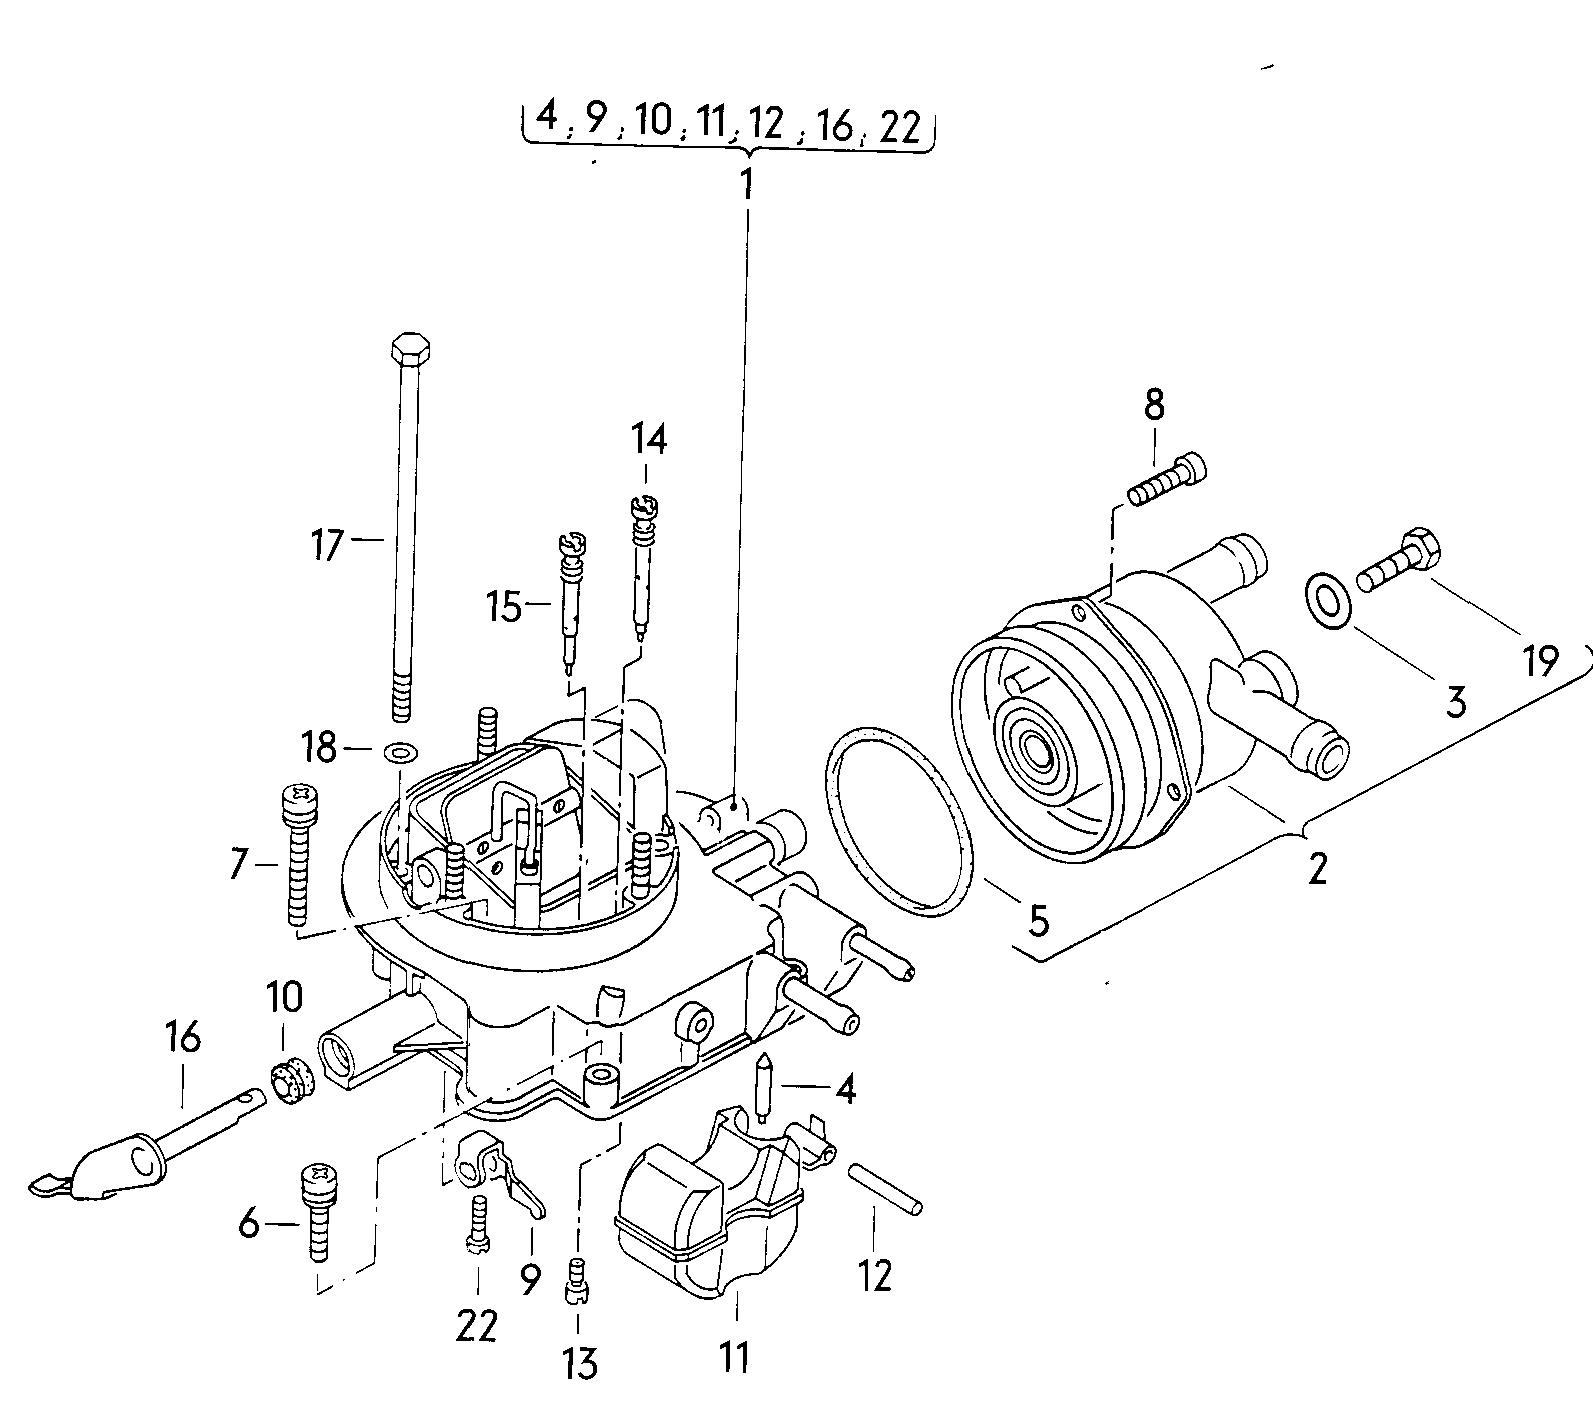 Parte sup. caja carburador                p. carburador: 1B3 - Audi 100/Avant - a100